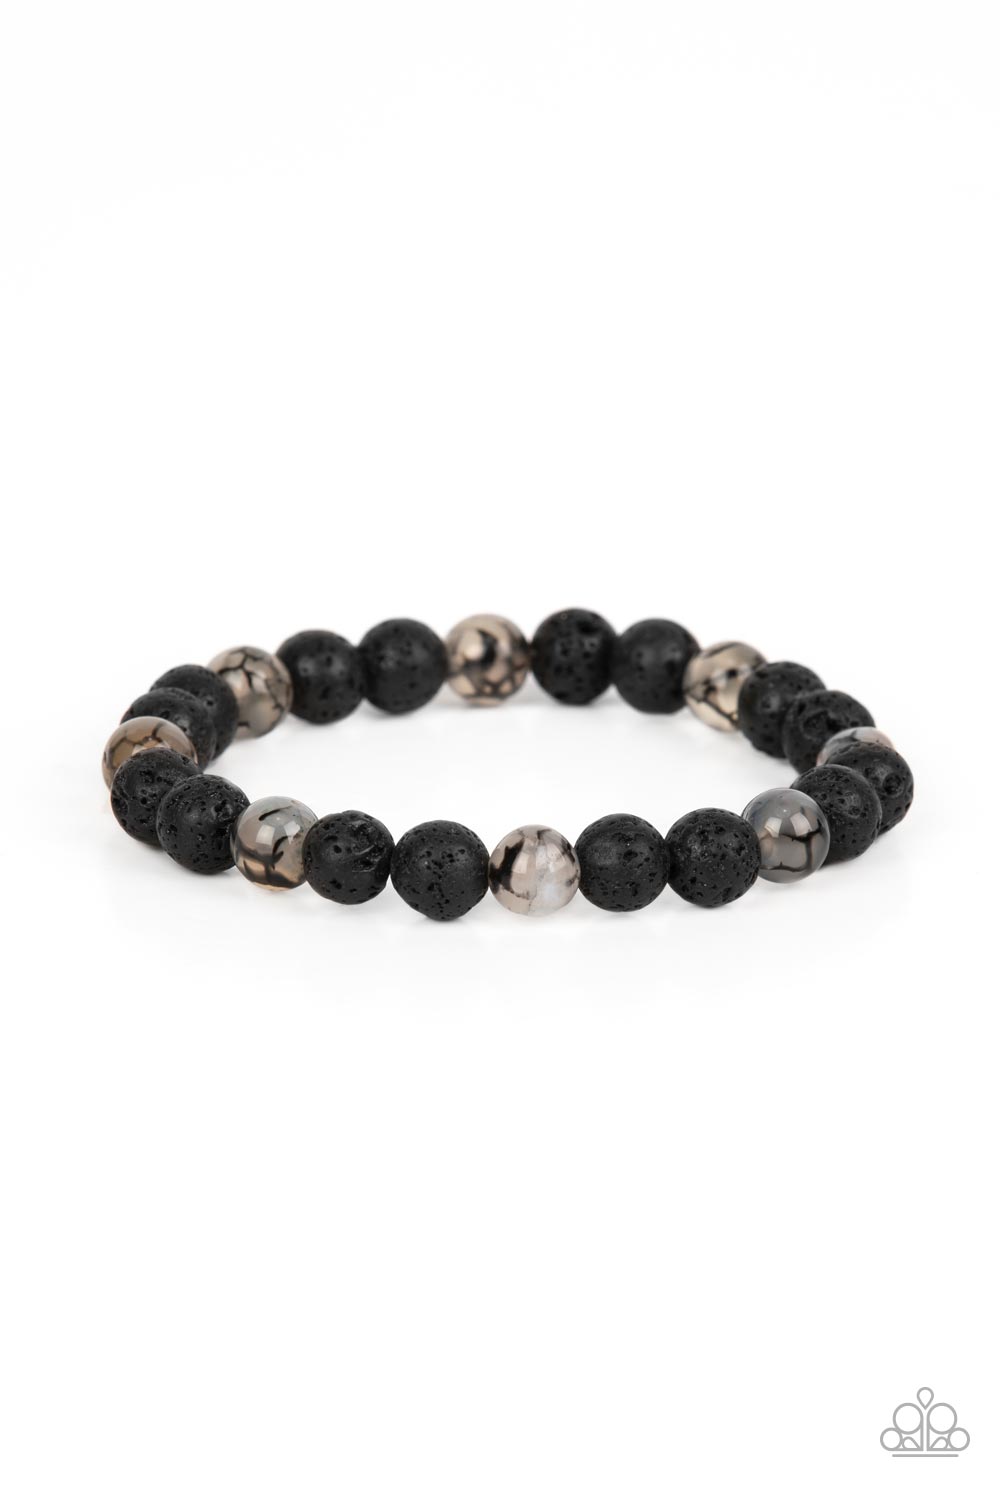 Molten Mogul Black Lava Rock Bracelet - Paparazzi Accessories- lightbox - CarasShop.com - $5 Jewelry by Cara Jewels